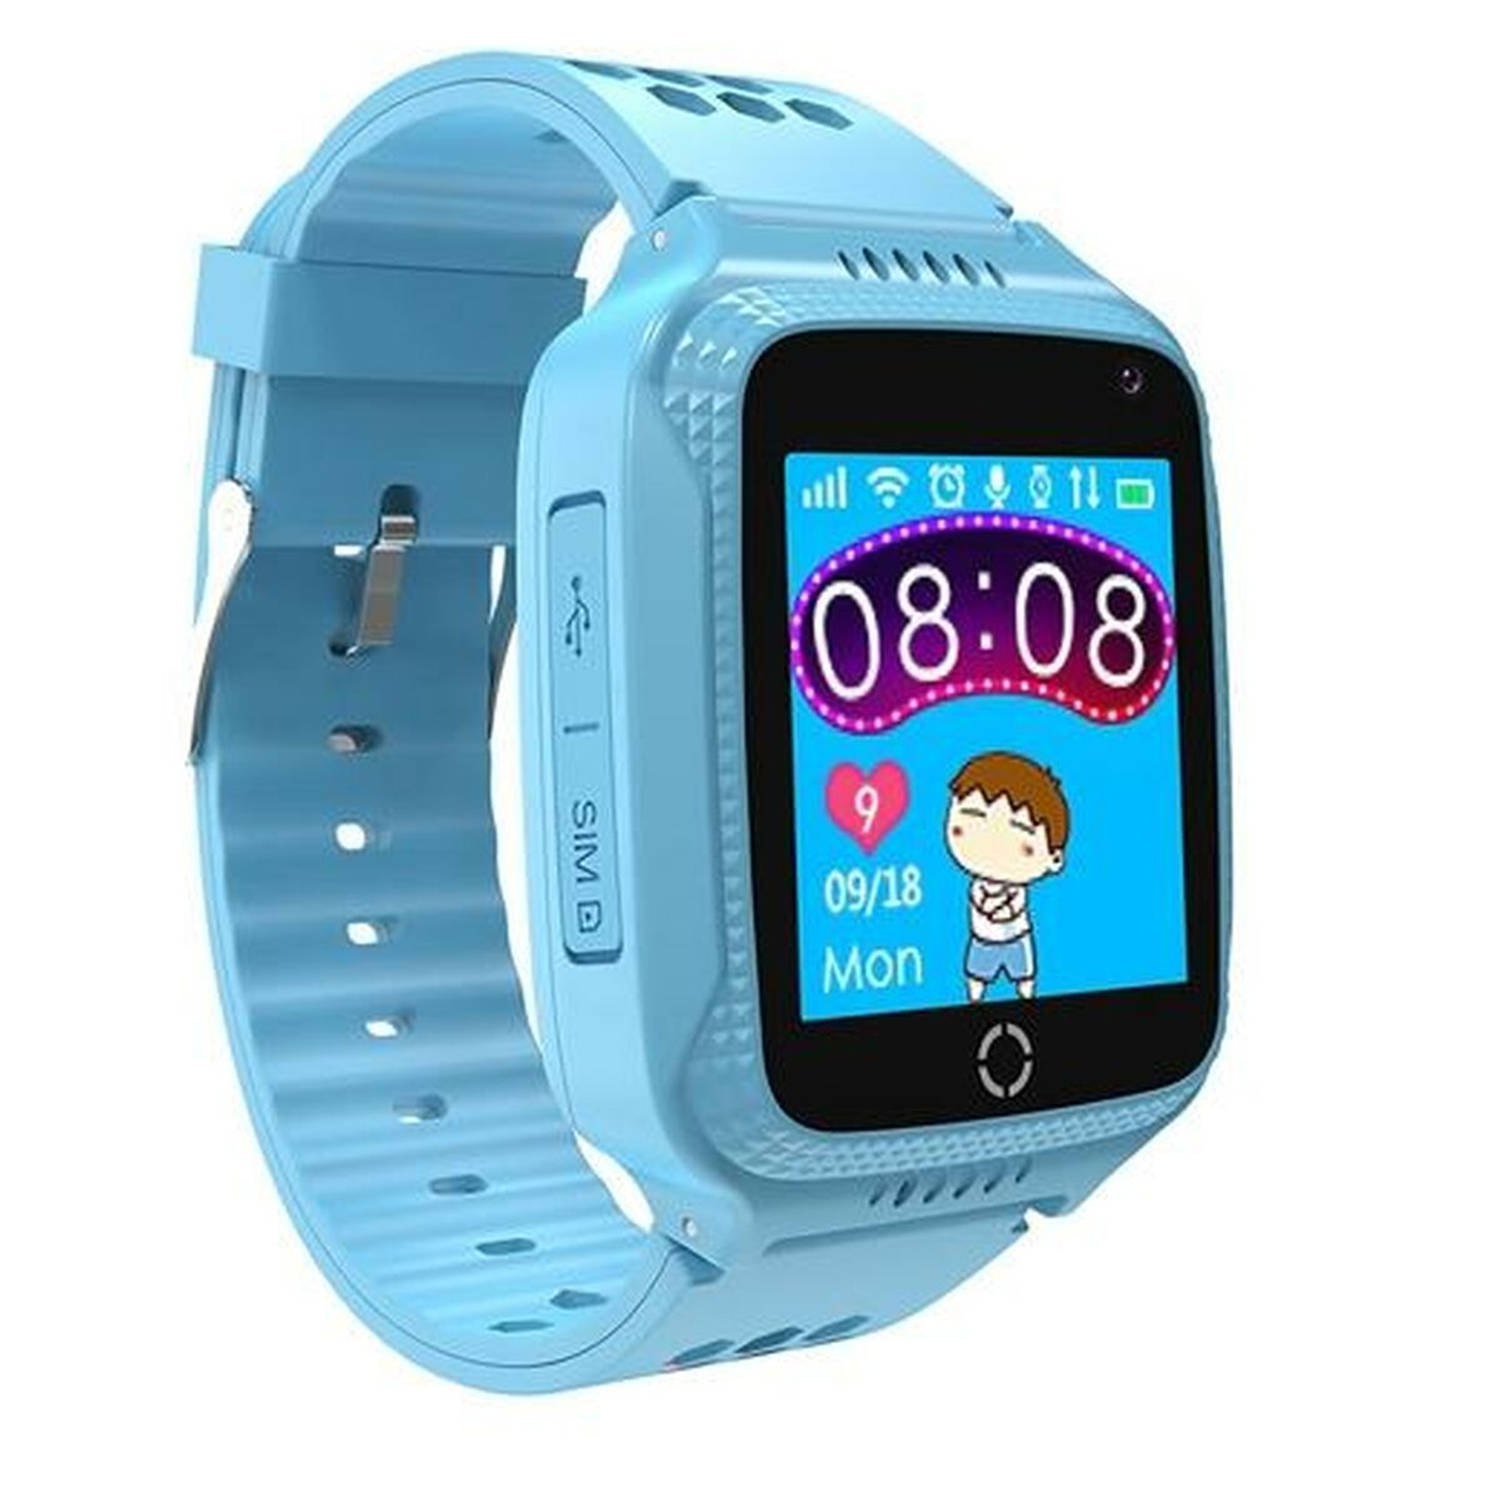 Smartwatch voor Kinderen Celly KIDSWATCH Blauw 1,44""